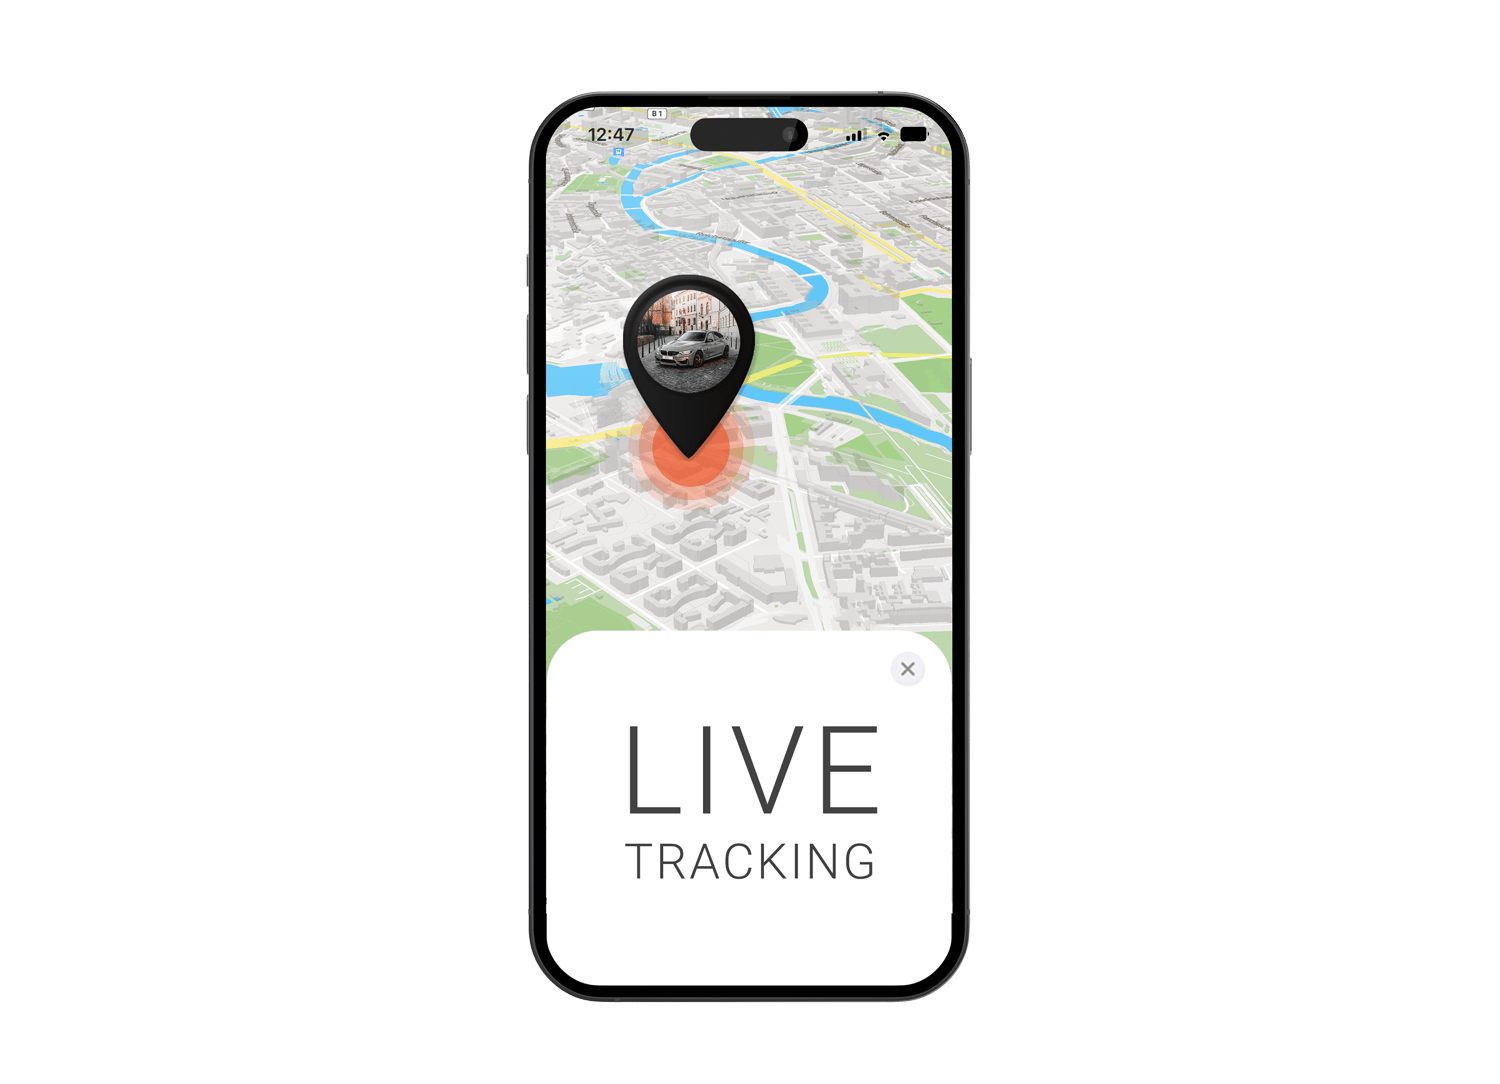 Mockup mit PAJ FINDER Portal App, Auto und LIVE Tracking